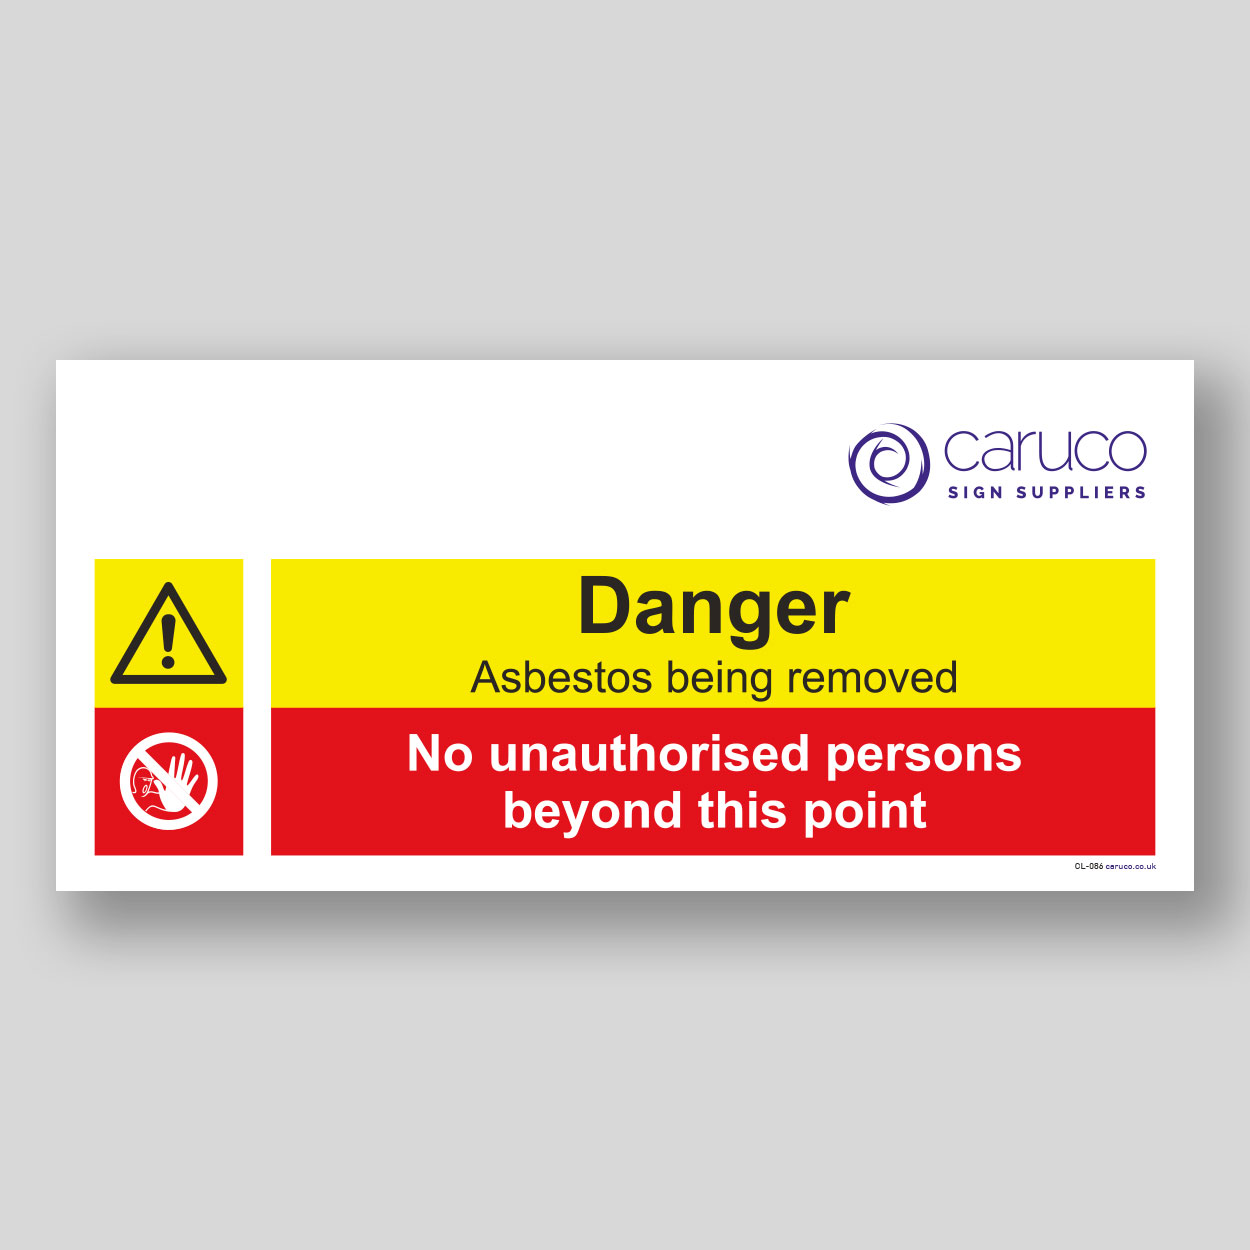 CL-086 Danger asbestos - no unauthorised persons